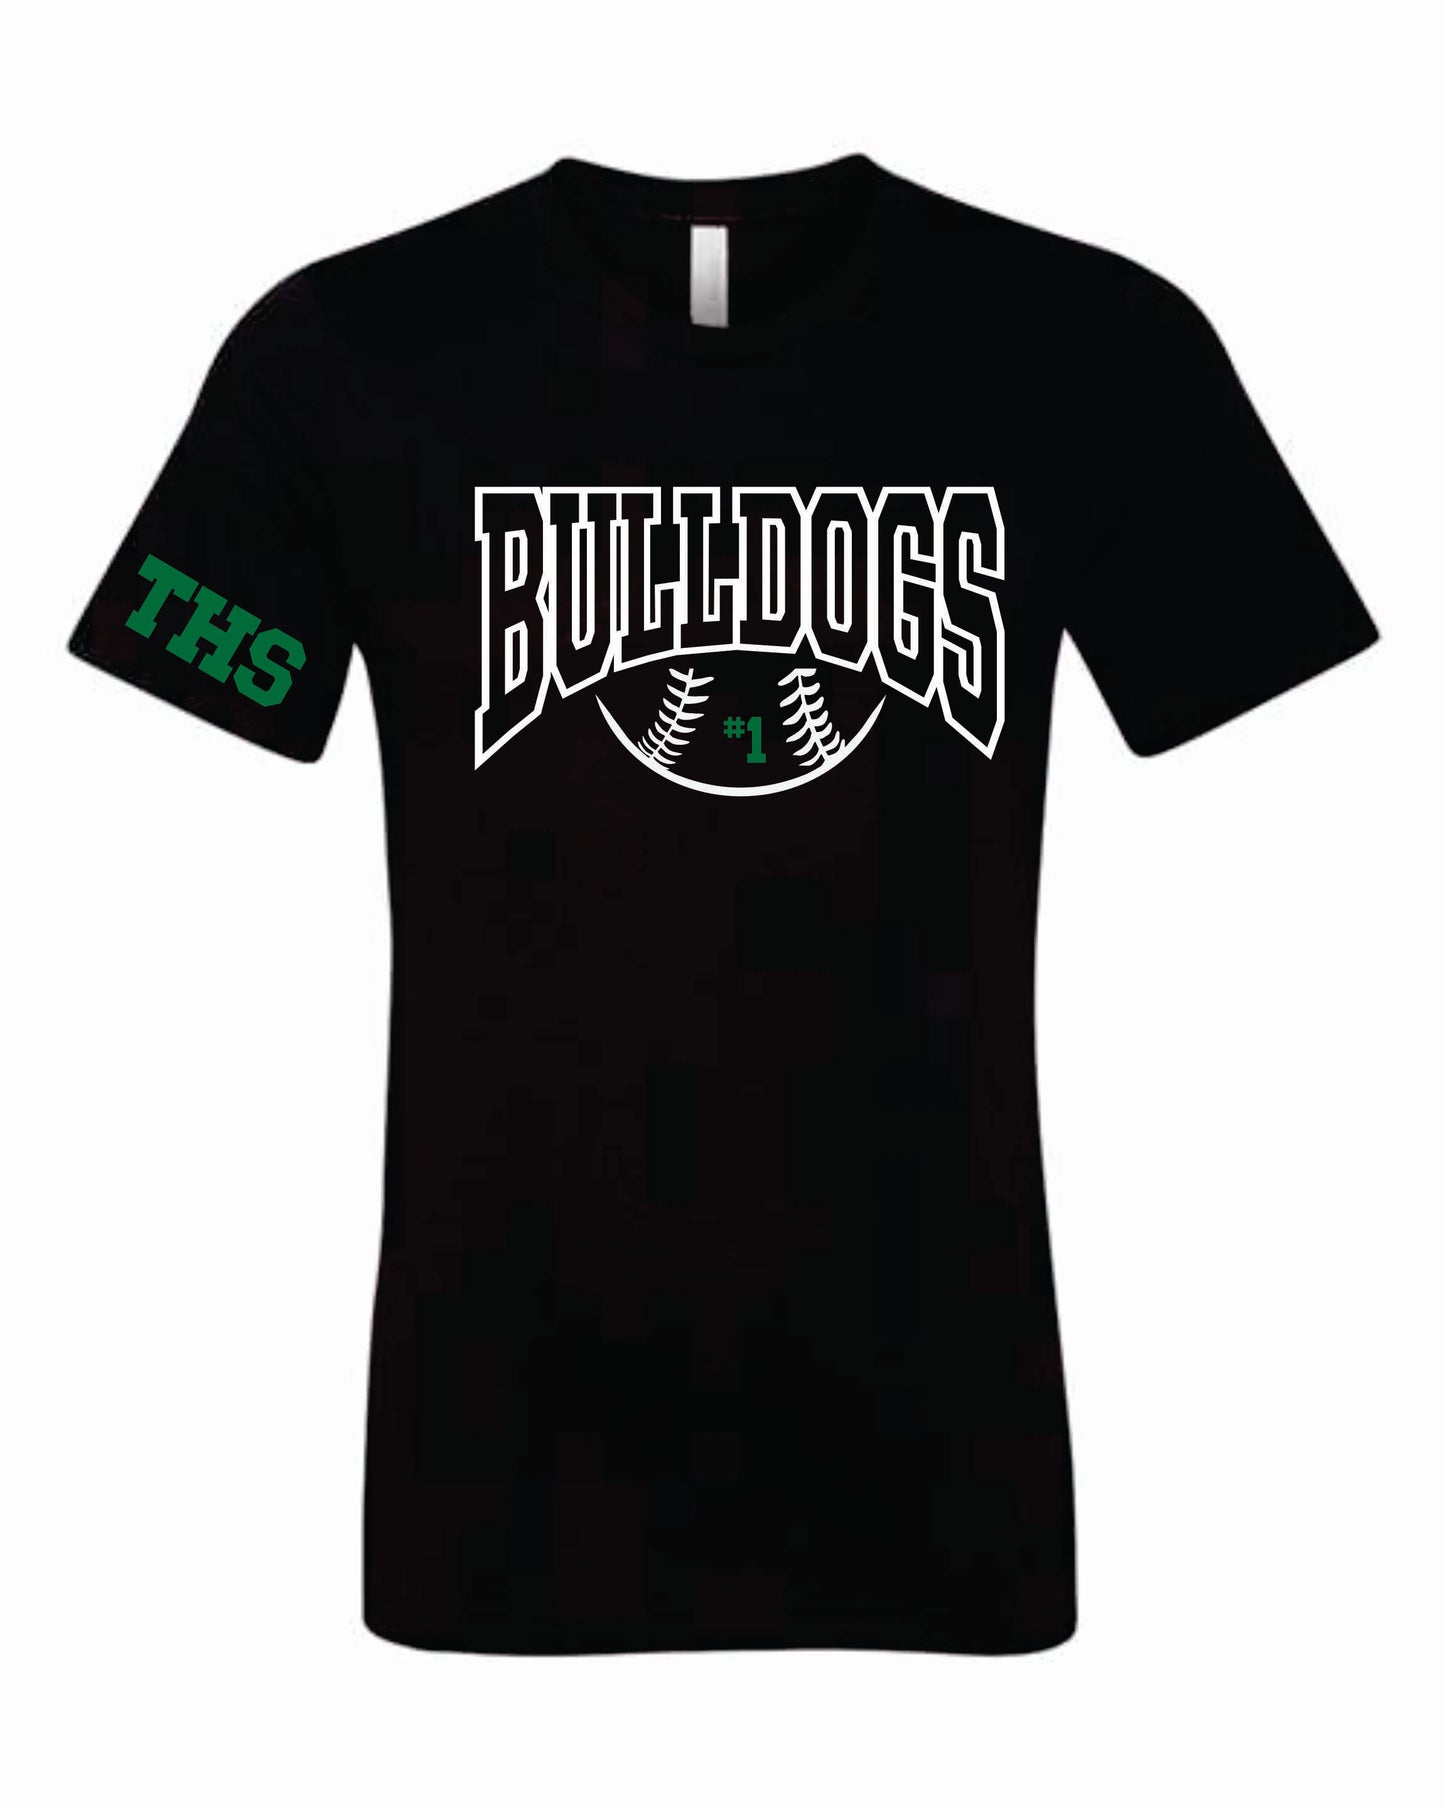 THS Bulldogs Baseball Tie Dye Tee